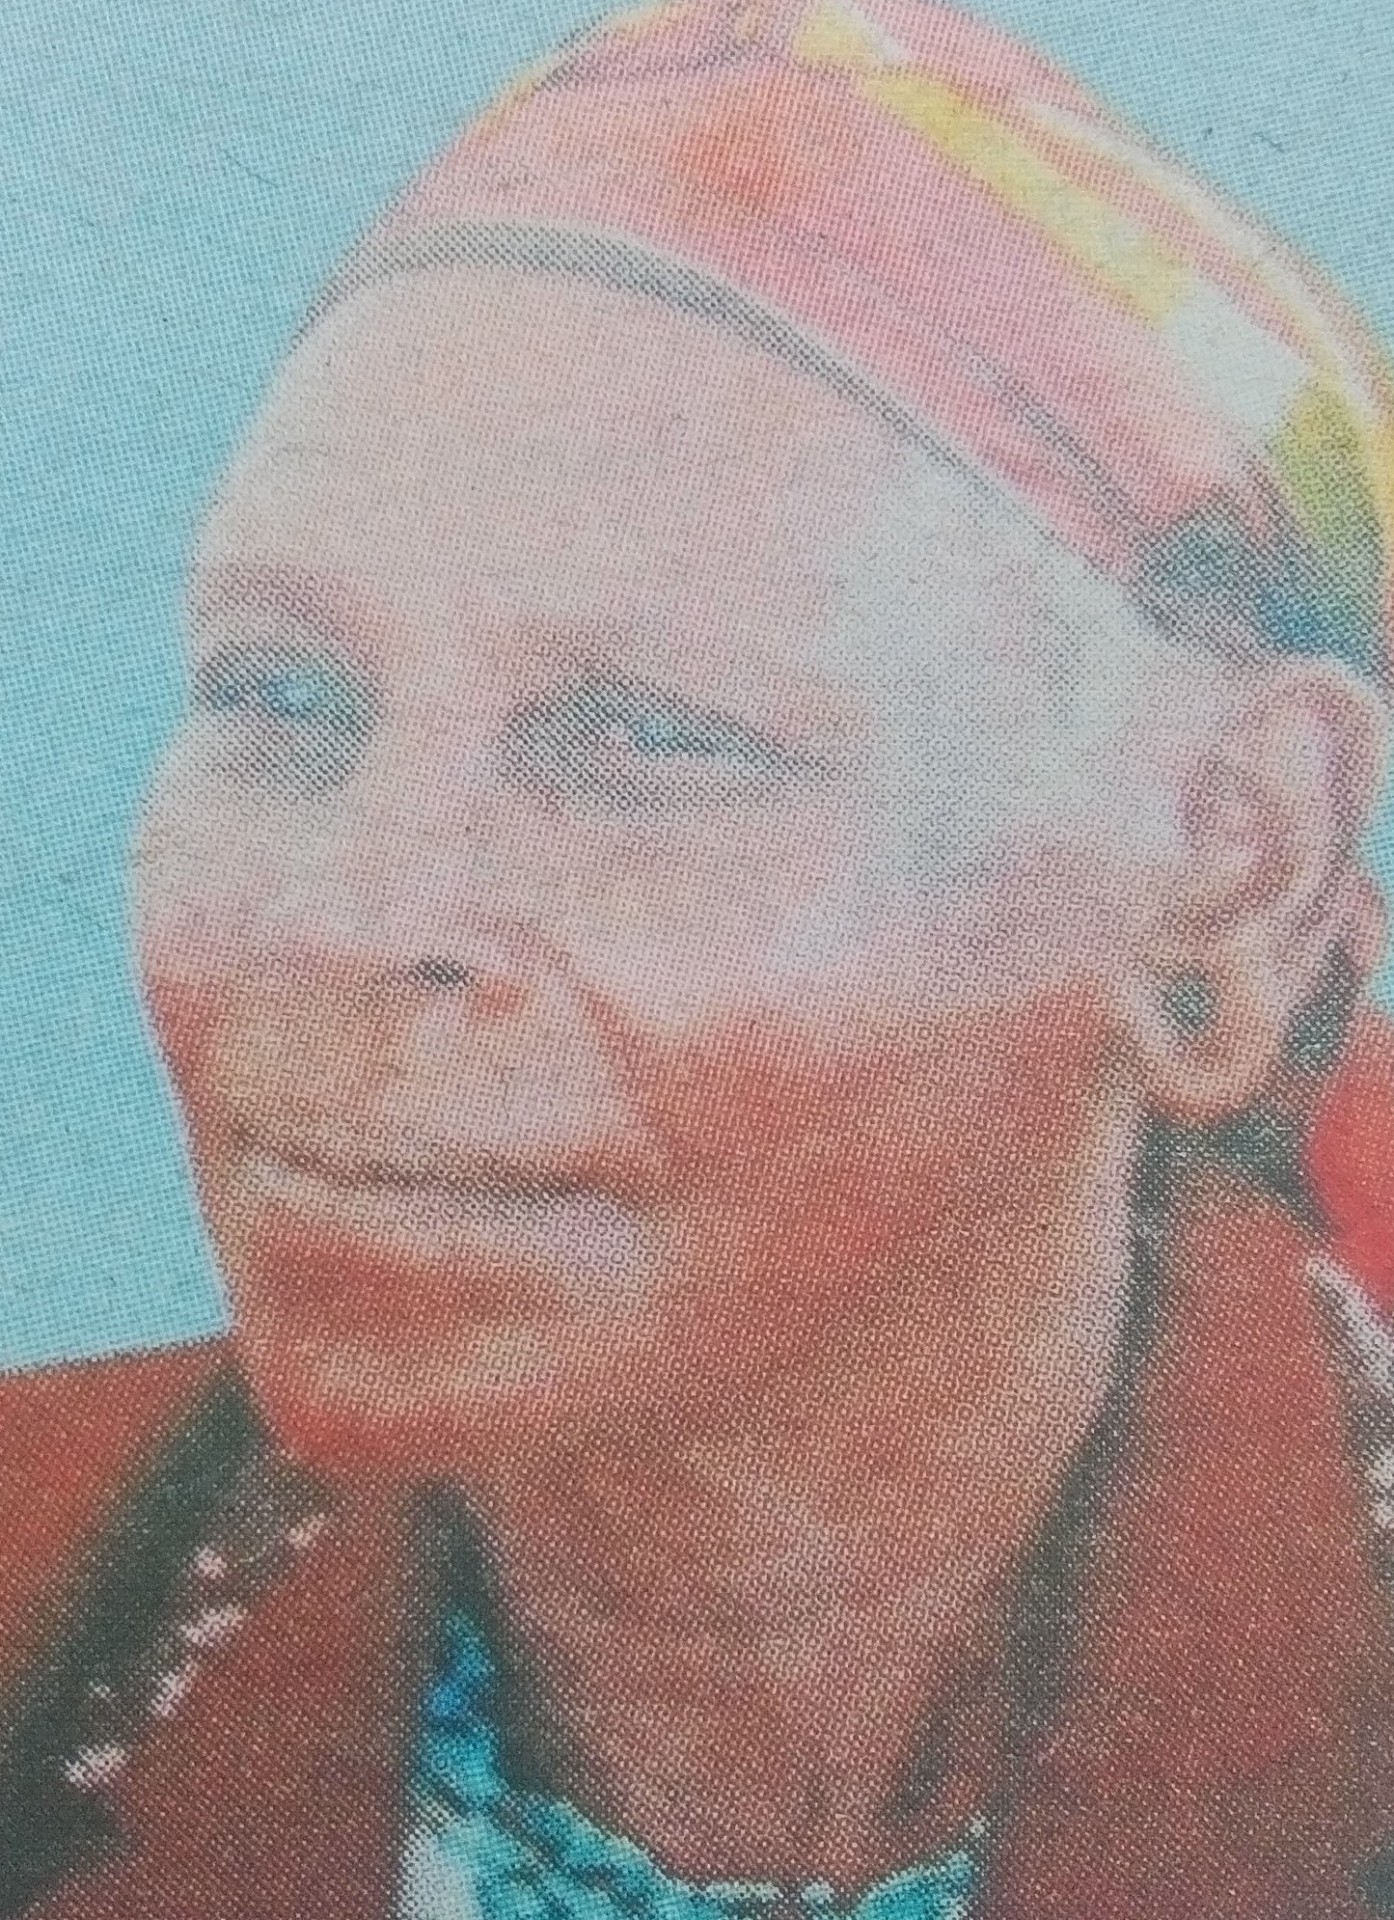 Obituary Image of Jane Kimooi Kipkoech